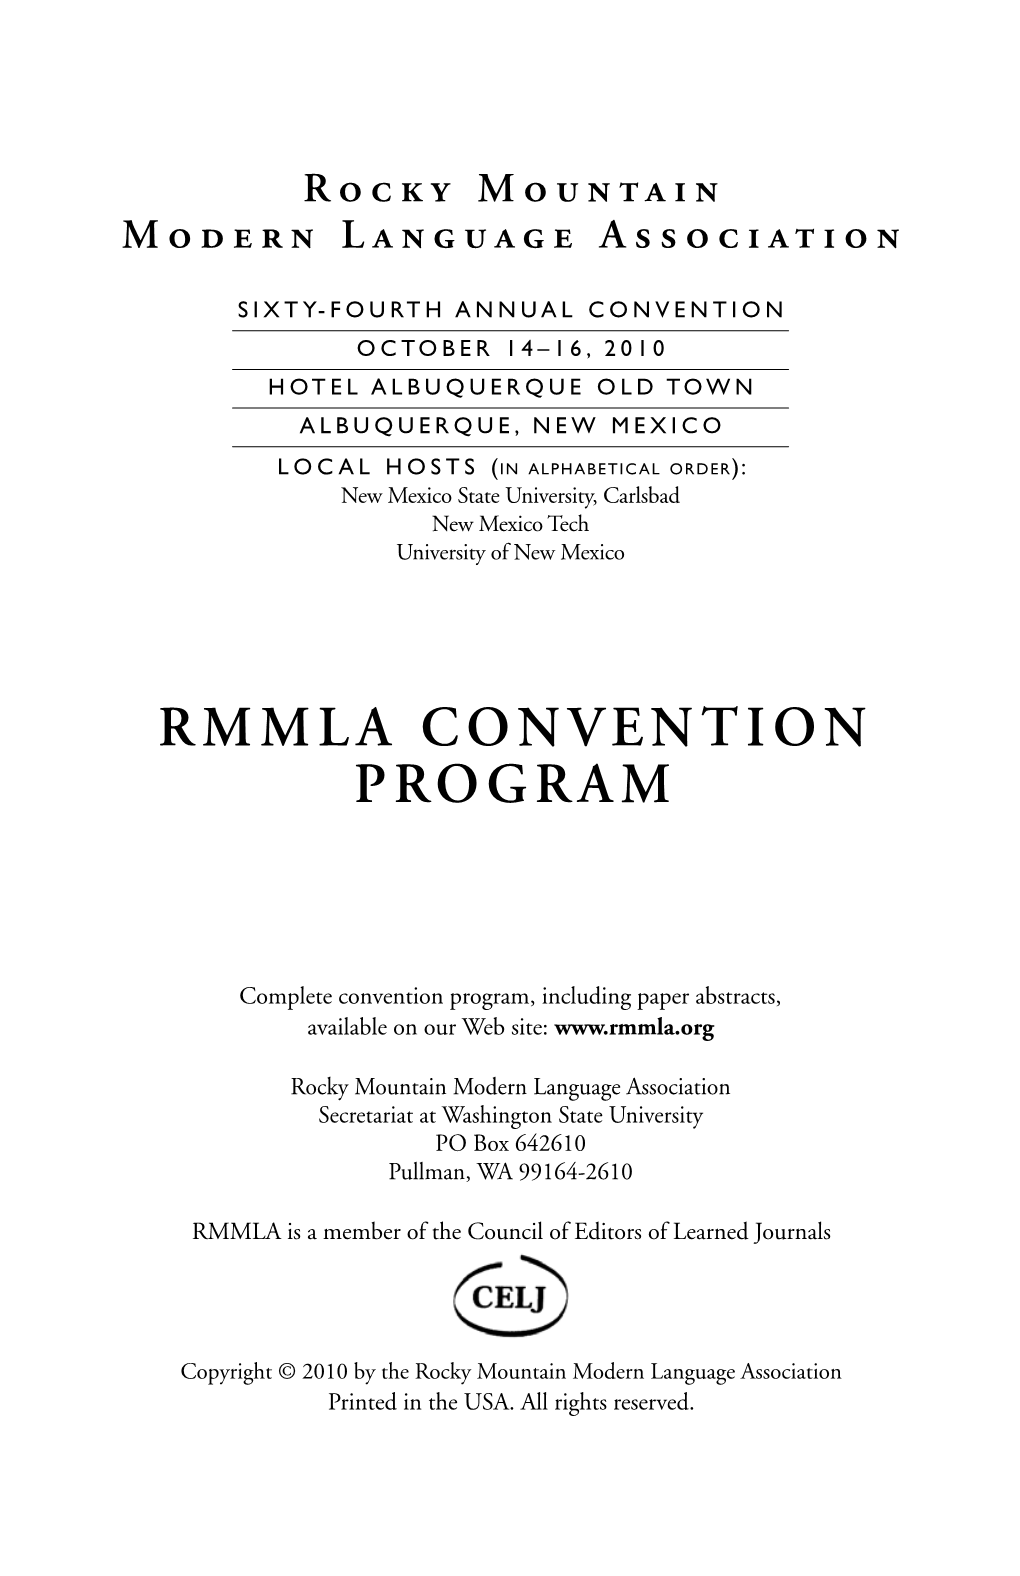 RMMLA Convention Program